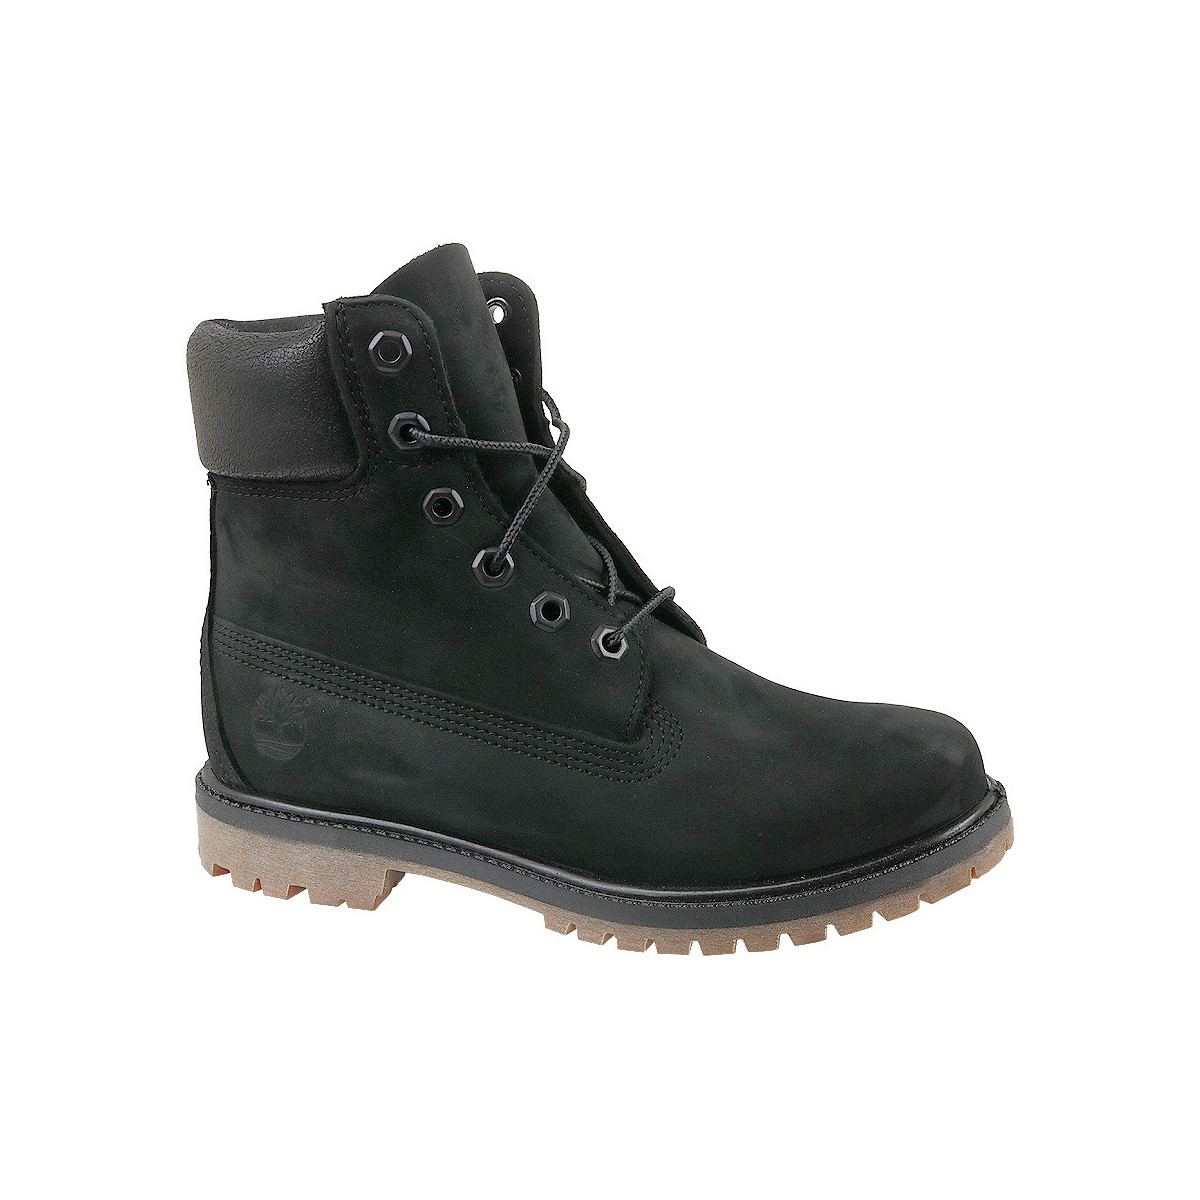 Pantofi Femei Ghete Timberland 6 In Premium Boot W Negru